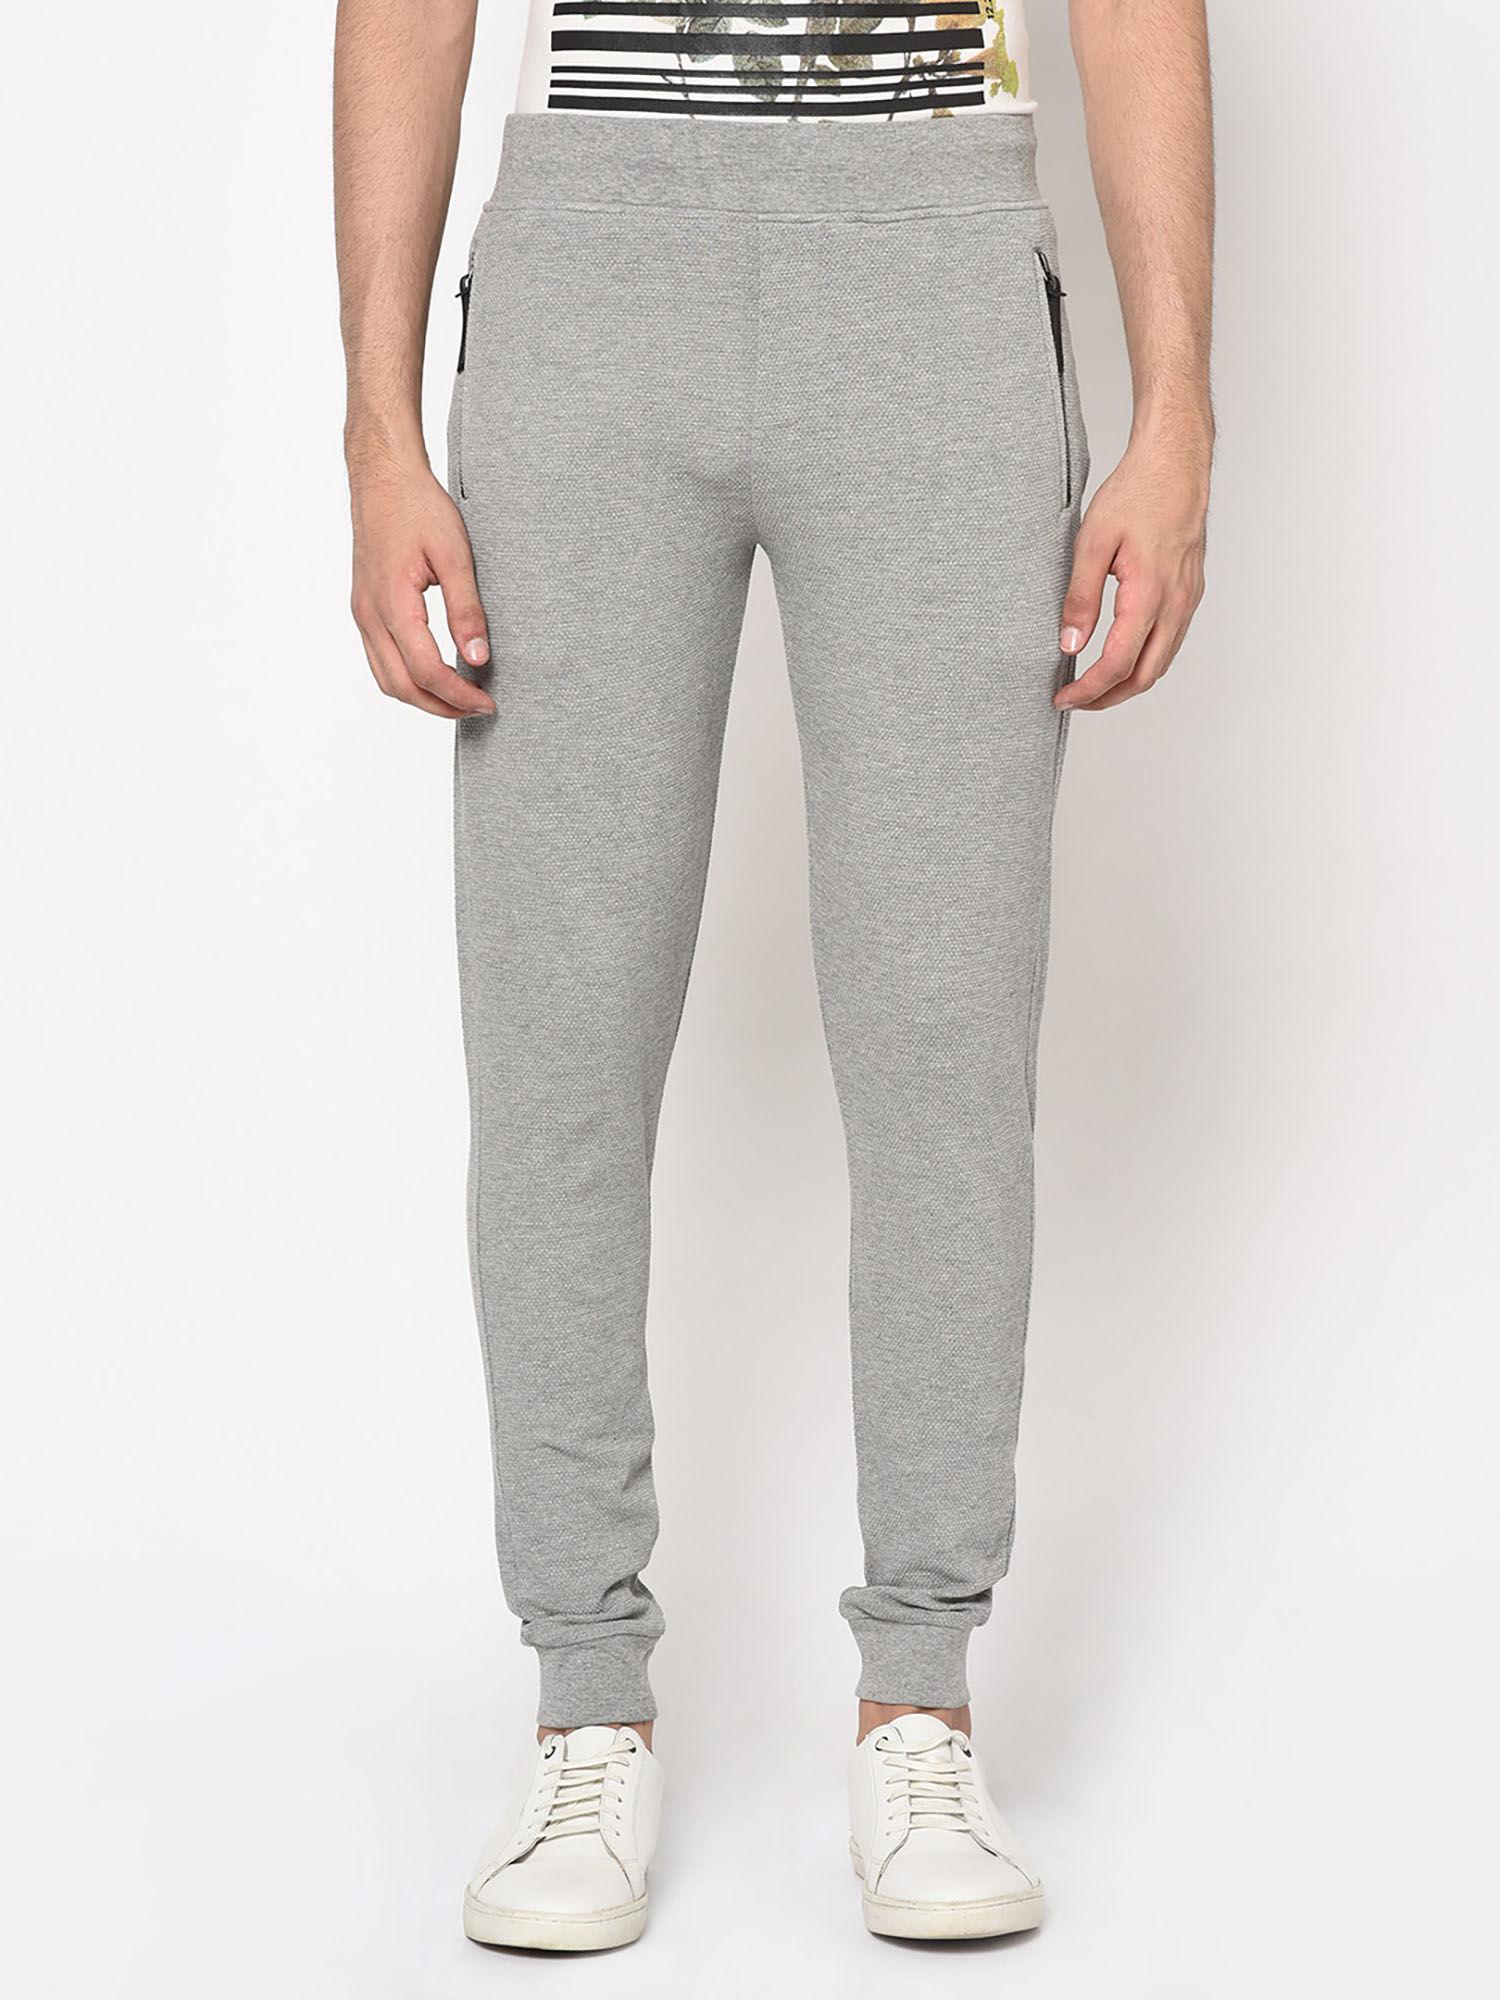 reflex-casual-khakis-in-grey